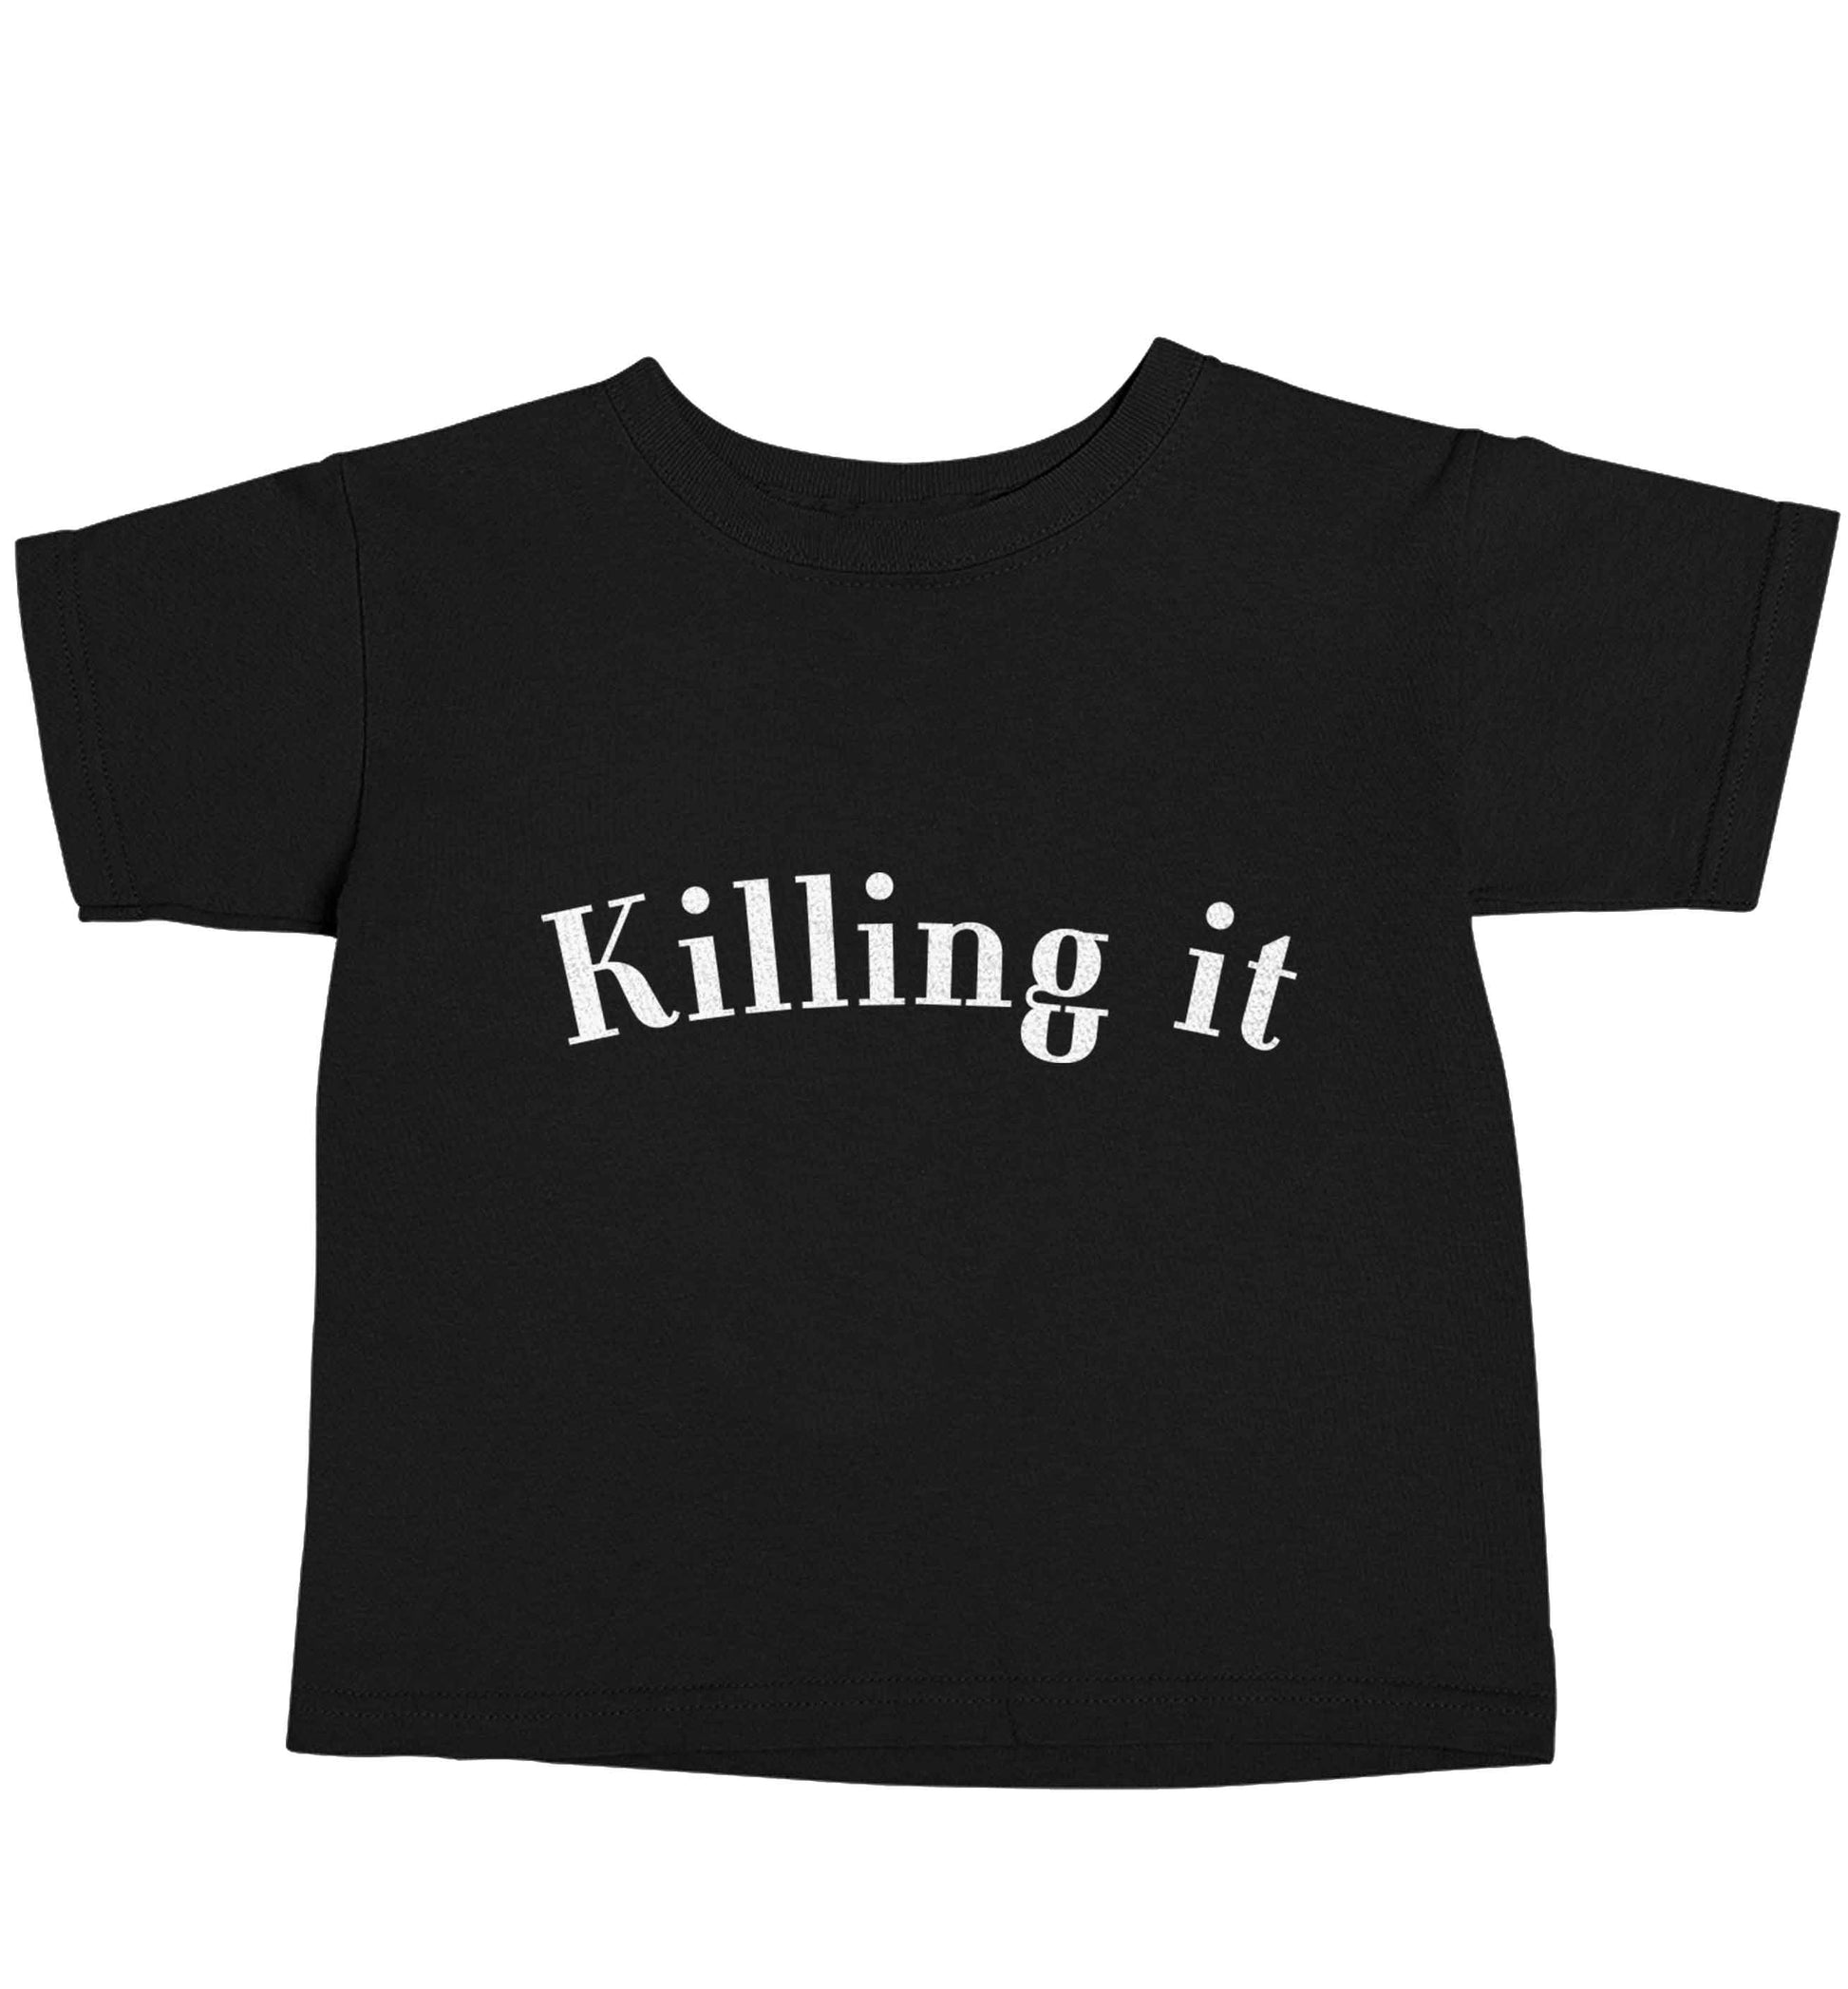 Killing it Black baby toddler Tshirt 2 years